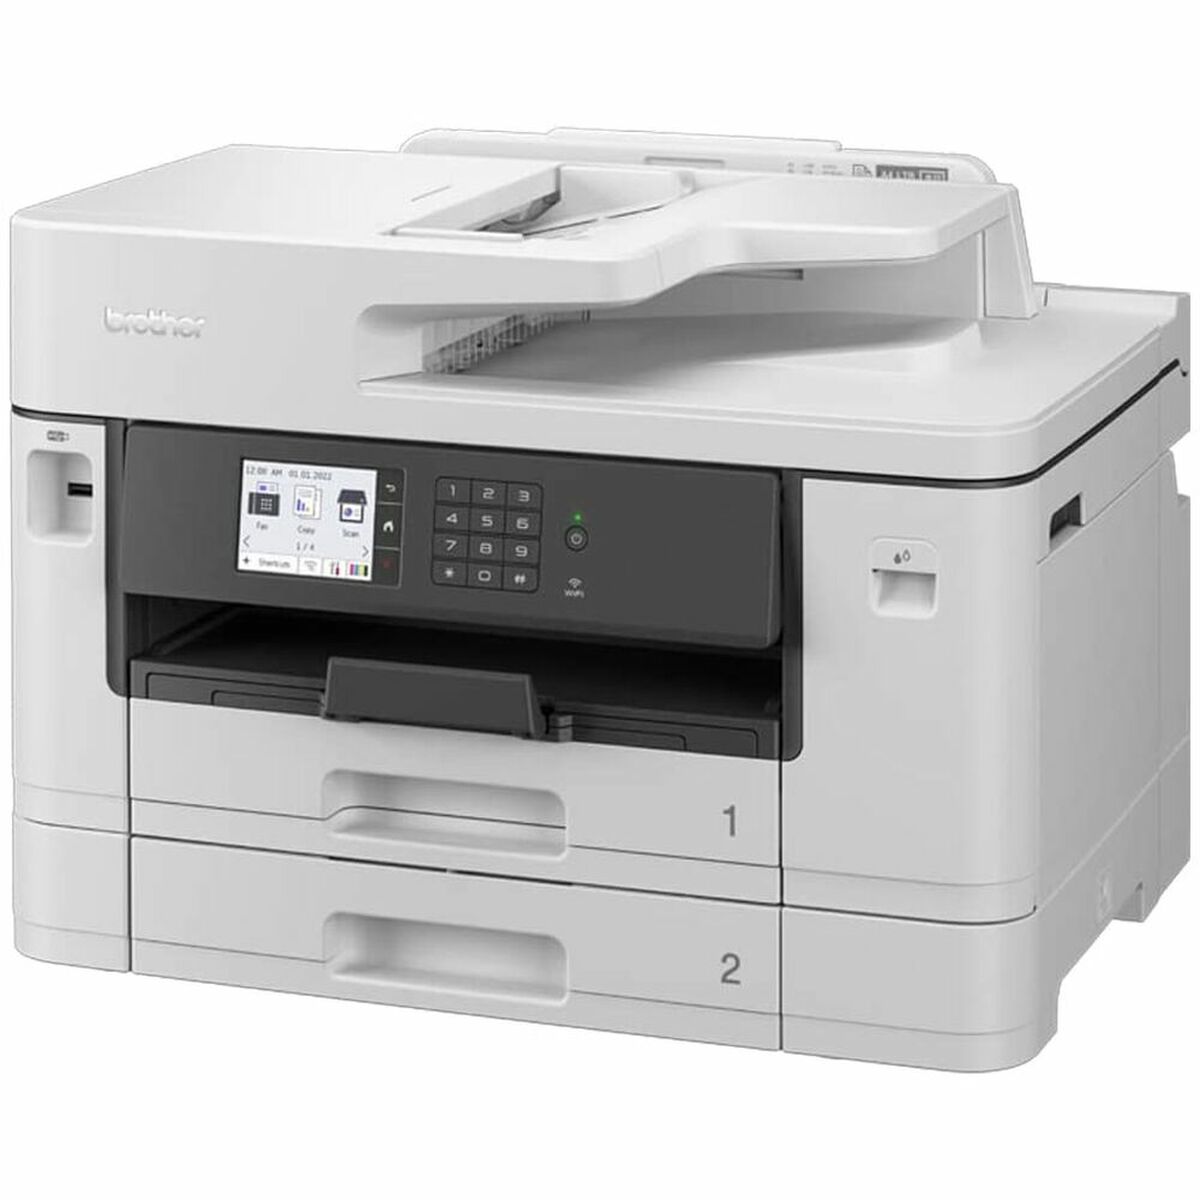 Impresora Multifunción Brother MFC-J5740DW